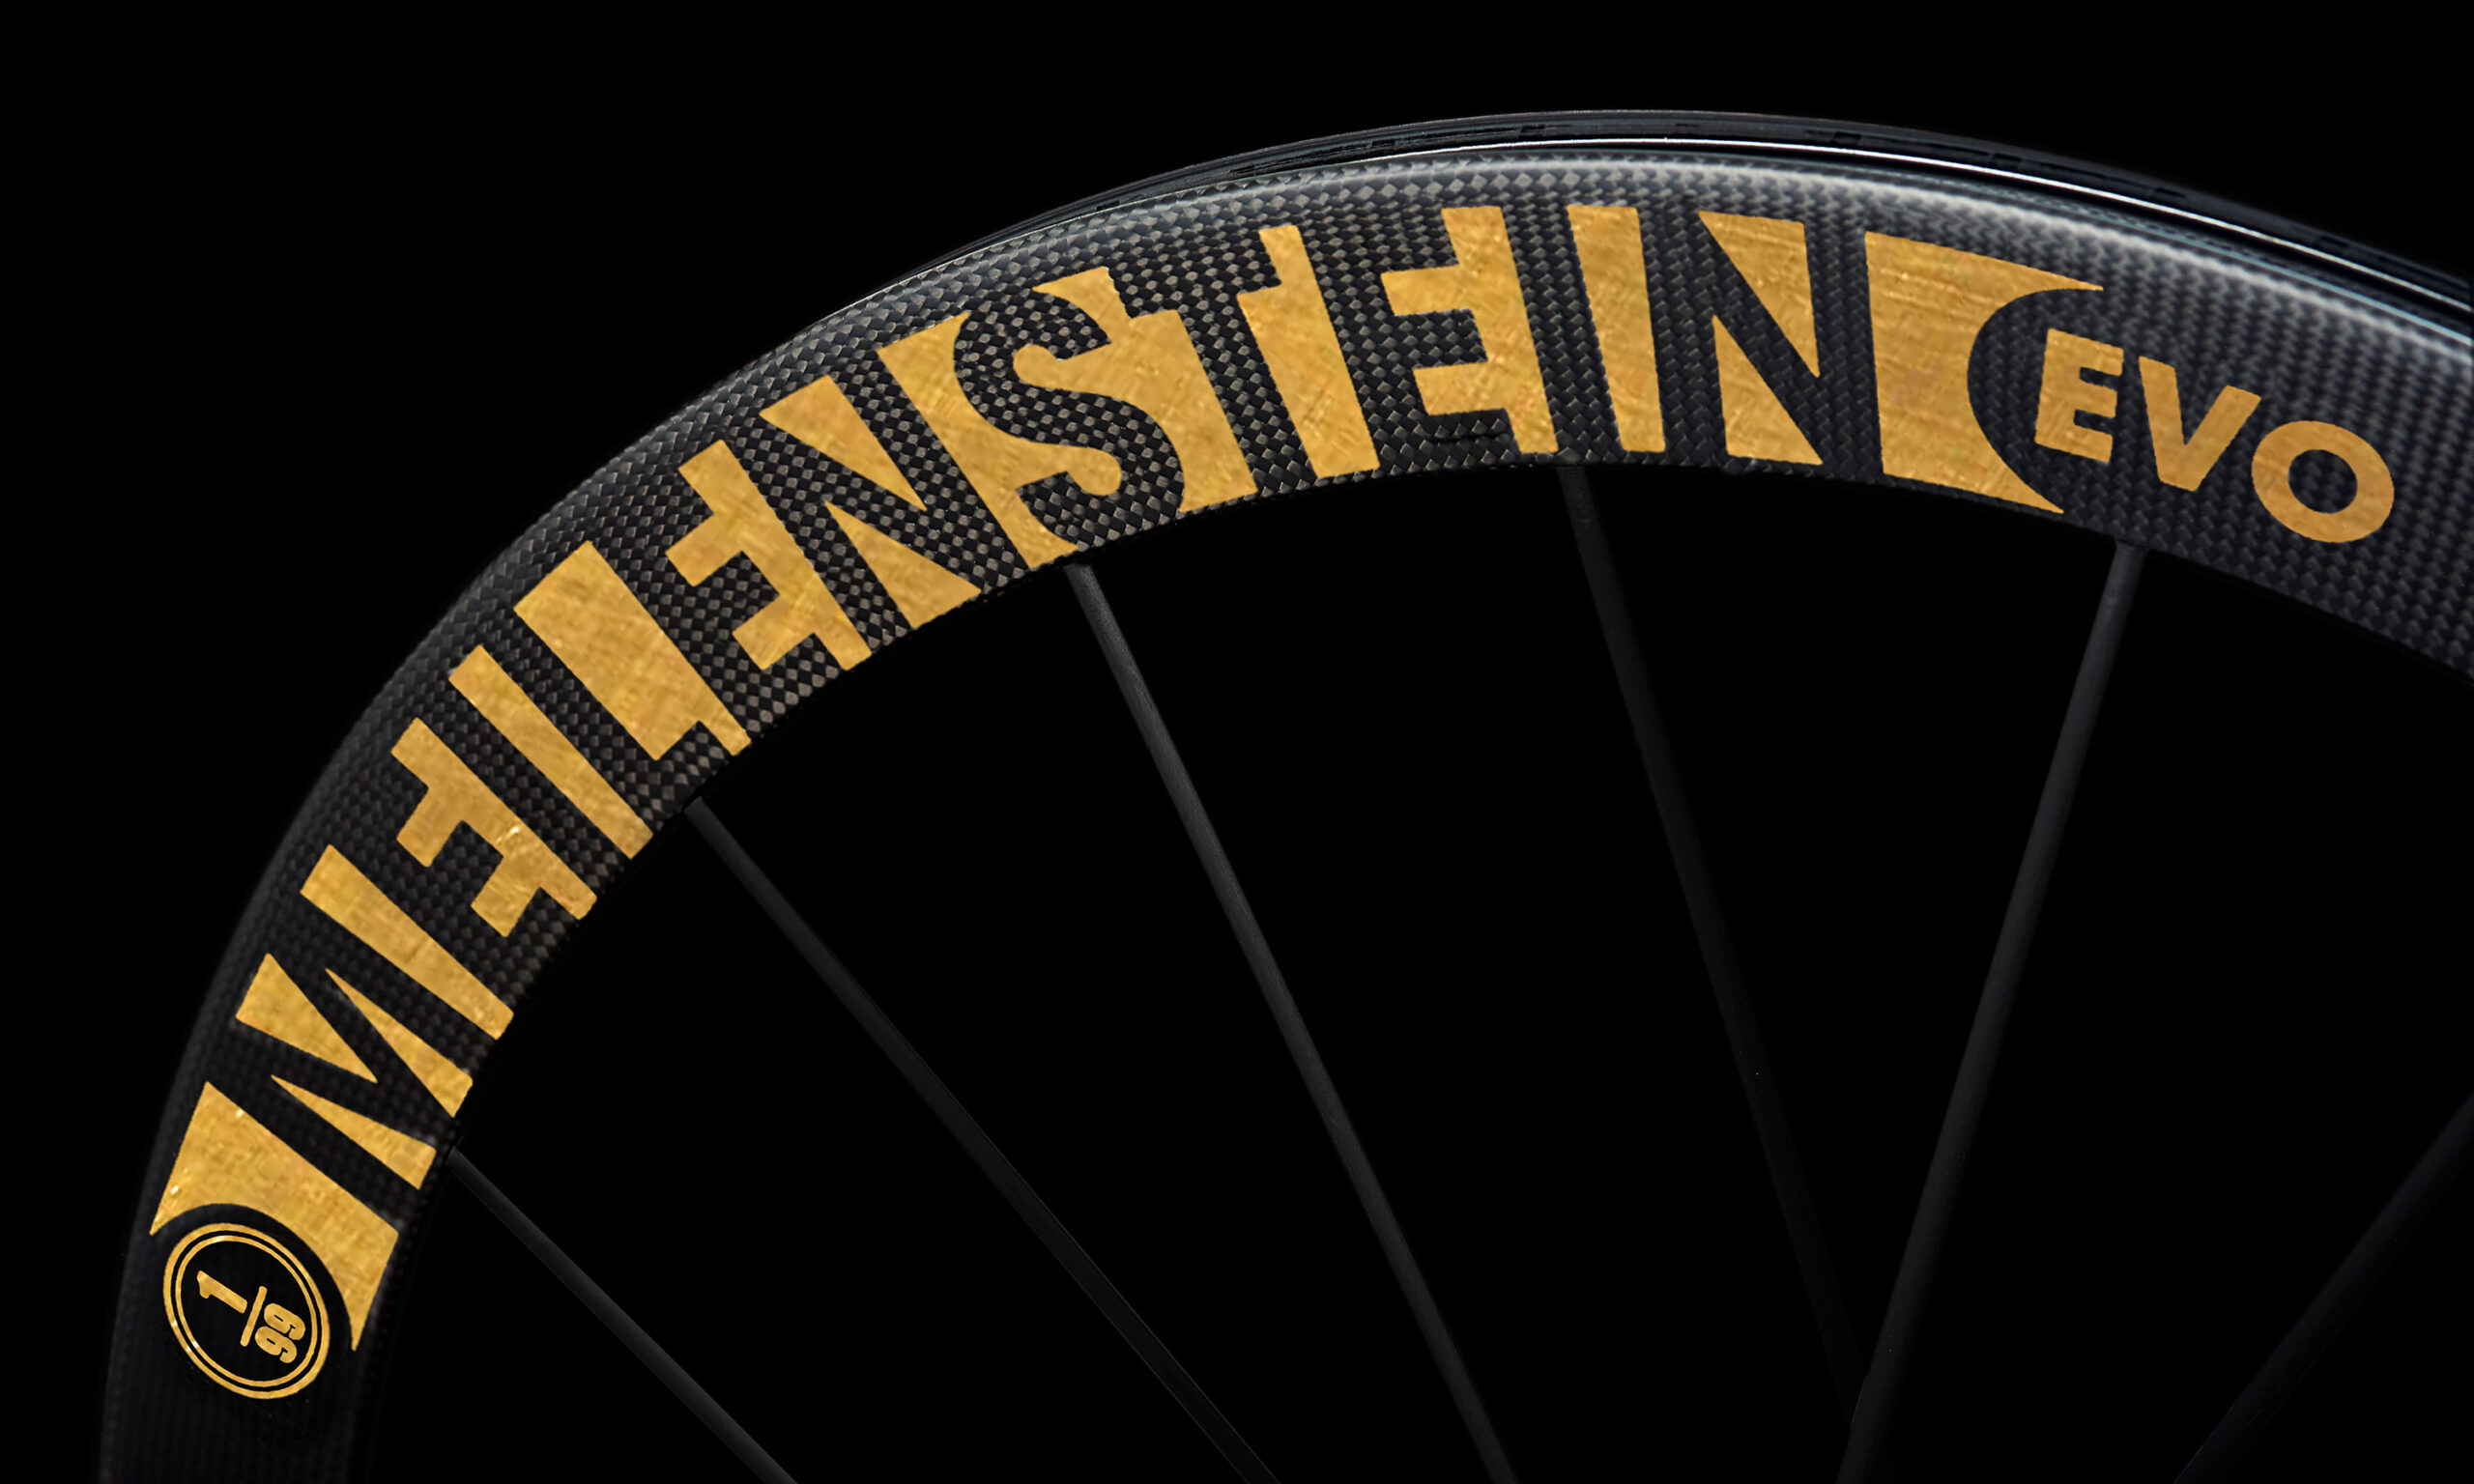 Lightweight-Meilenstein-EVO-Signature-Edition-Gold-carbon-road-wheels_gold-leaf-scaled.jpg